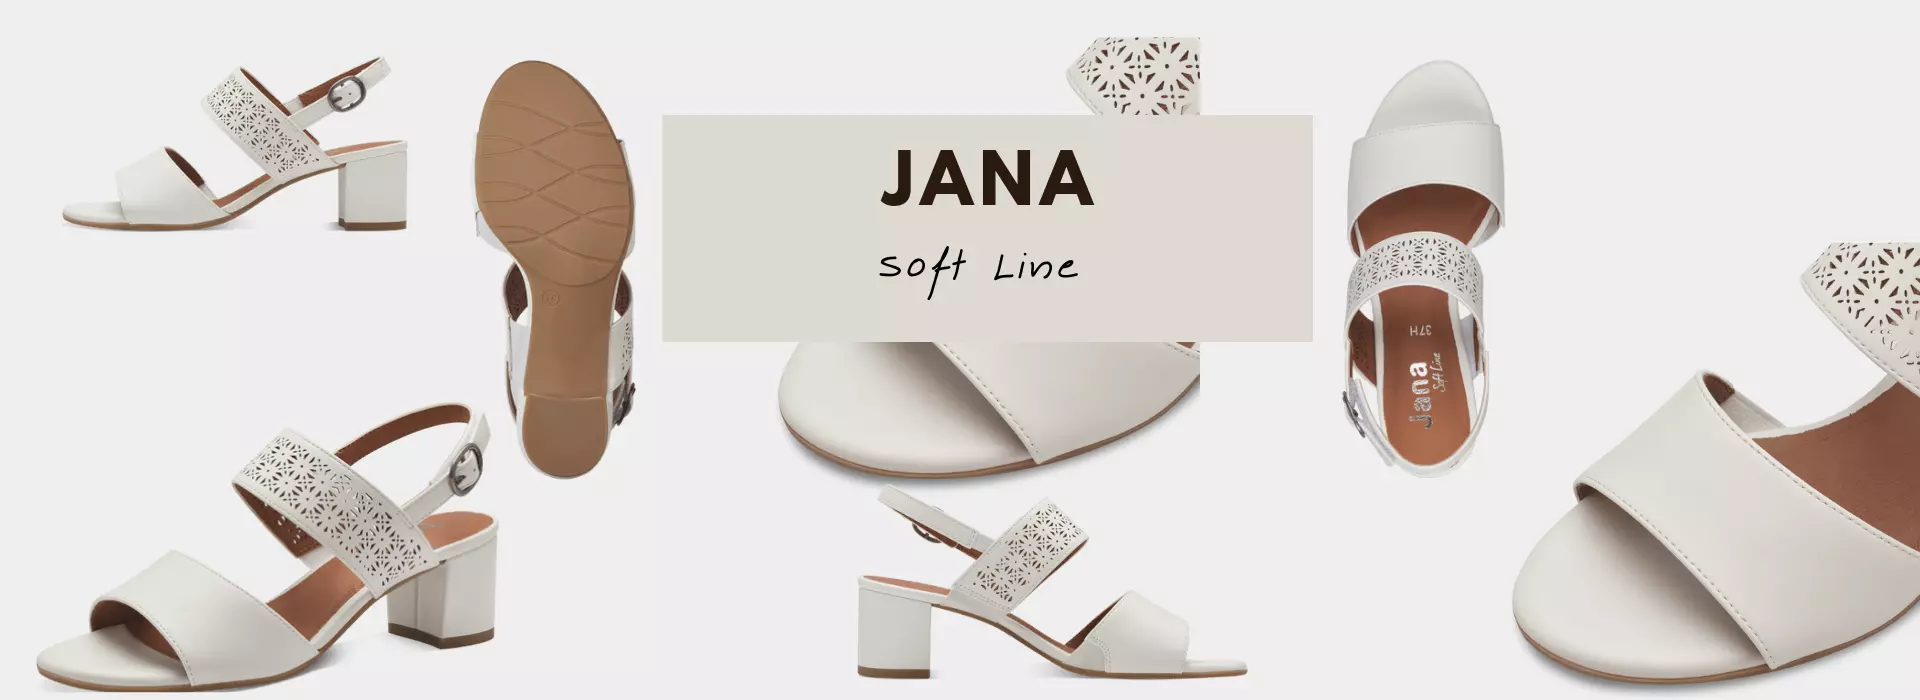 Jana Soft Line